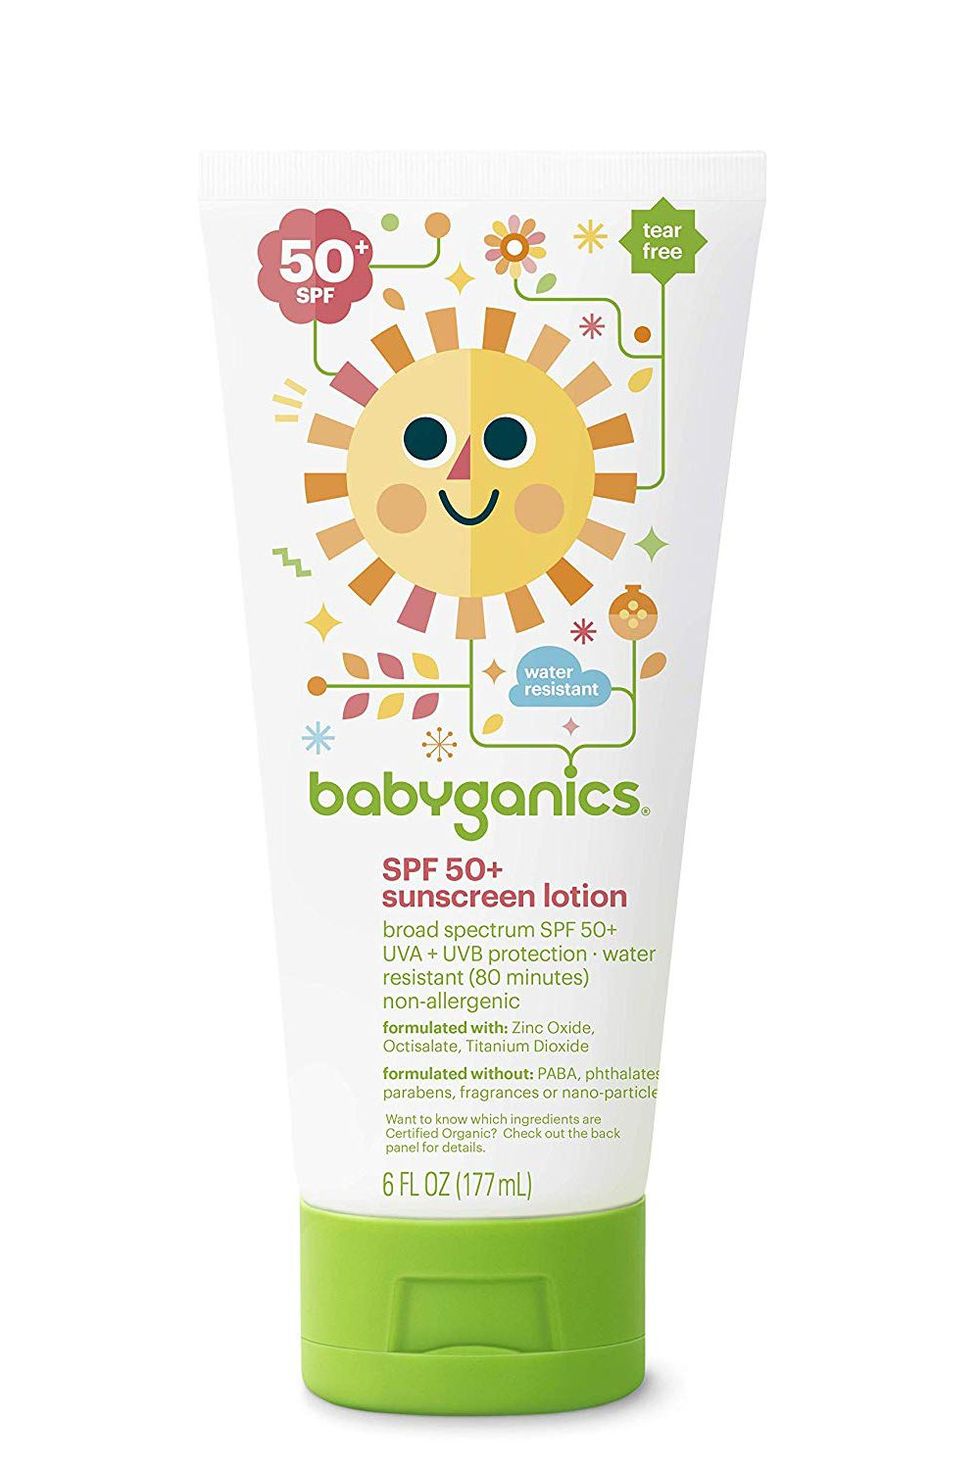 For Sensitive Skin: Babyganics Mineral-Based Baby Sunscreen SPF 50